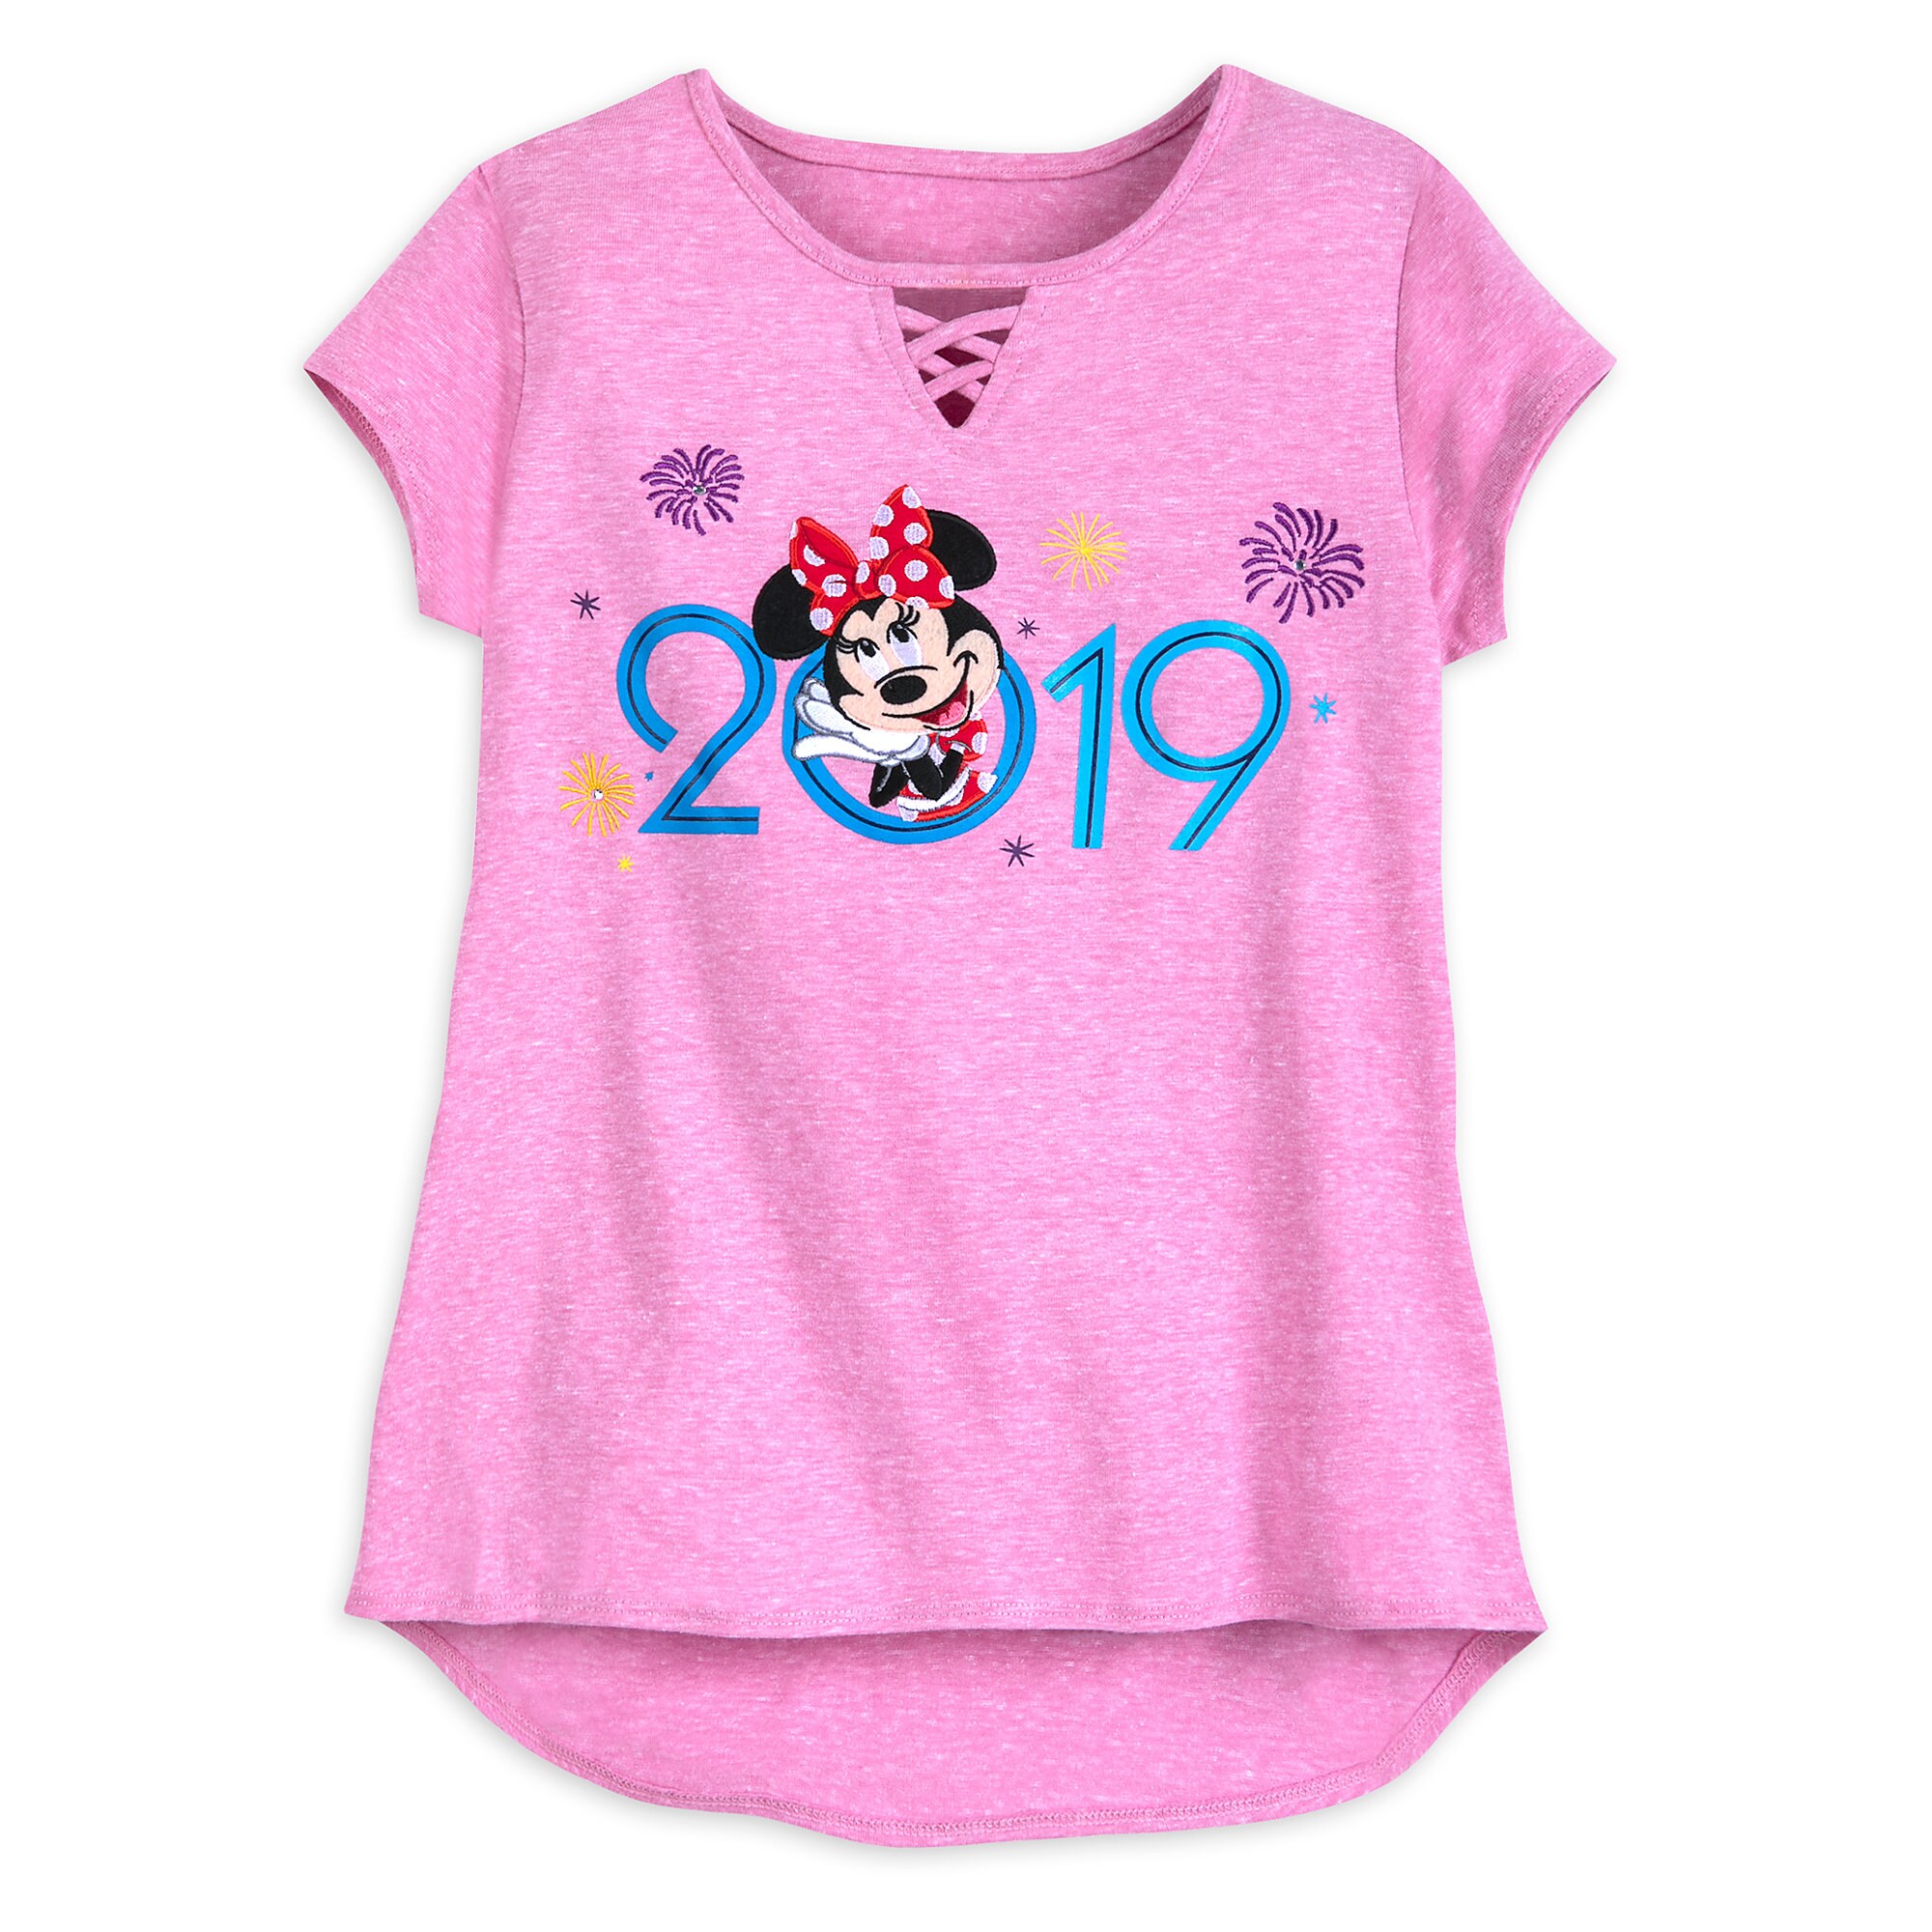 Minnie Mouse Fashion Tee for Girls - Walt Disney World 2019